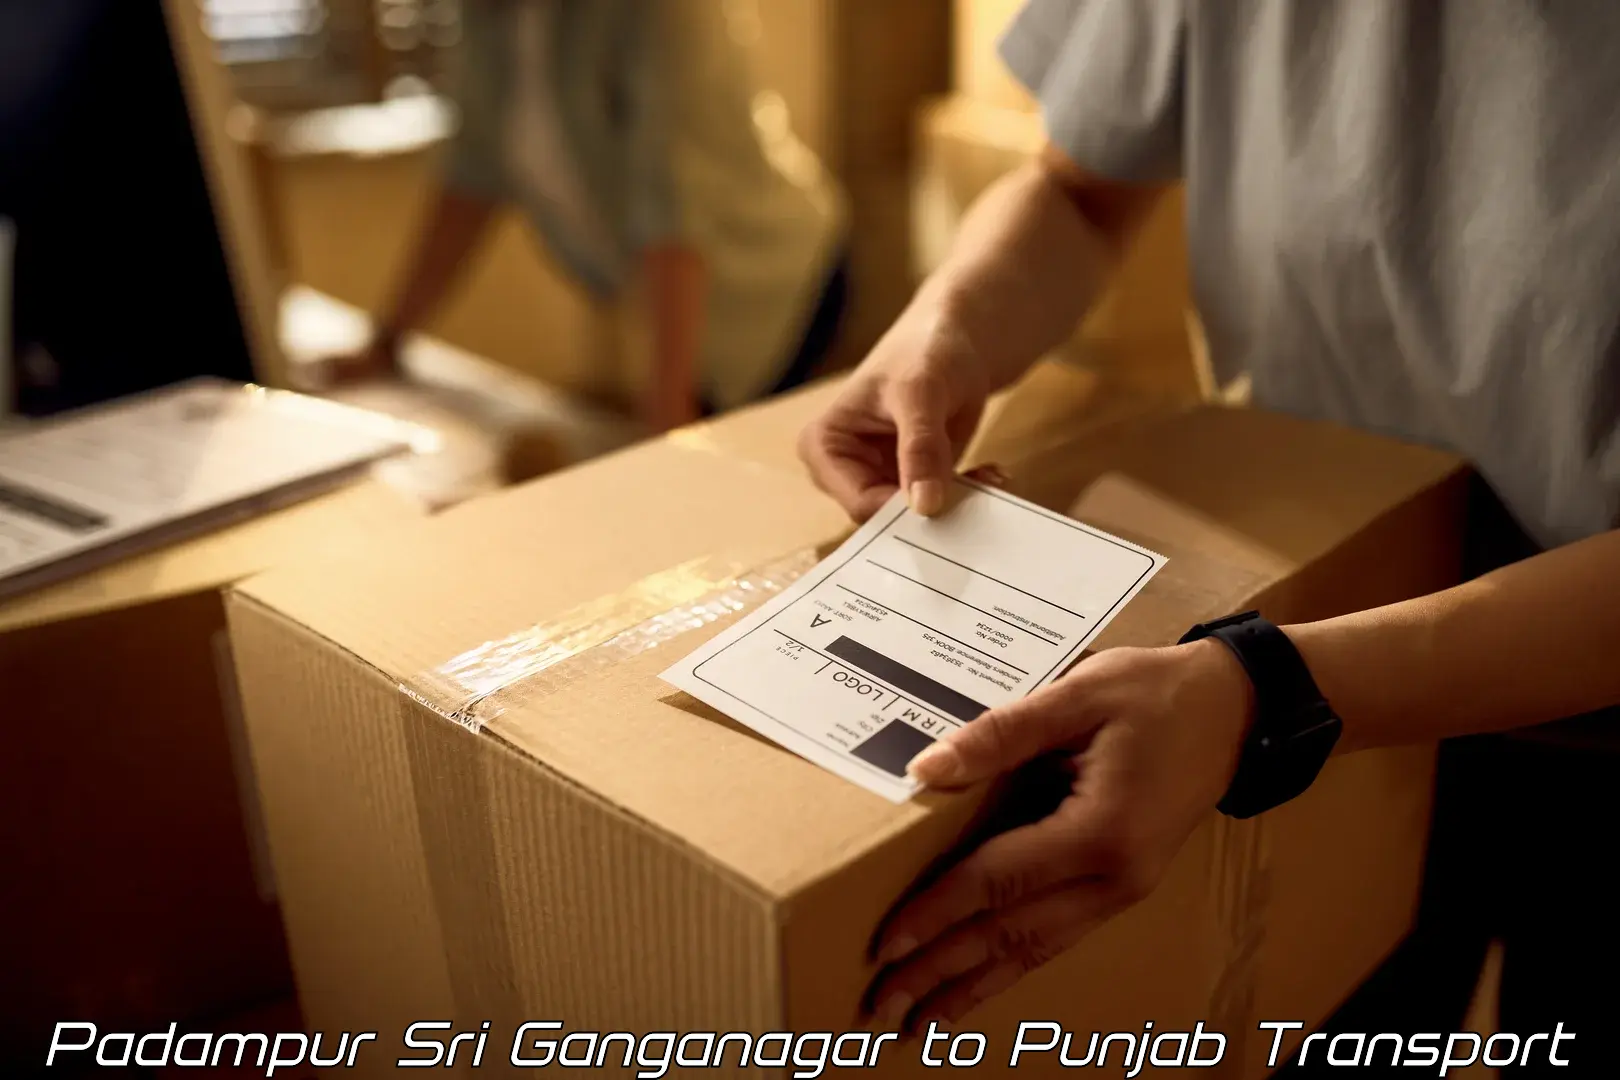 Vehicle parcel service Padampur Sri Ganganagar to Mohali